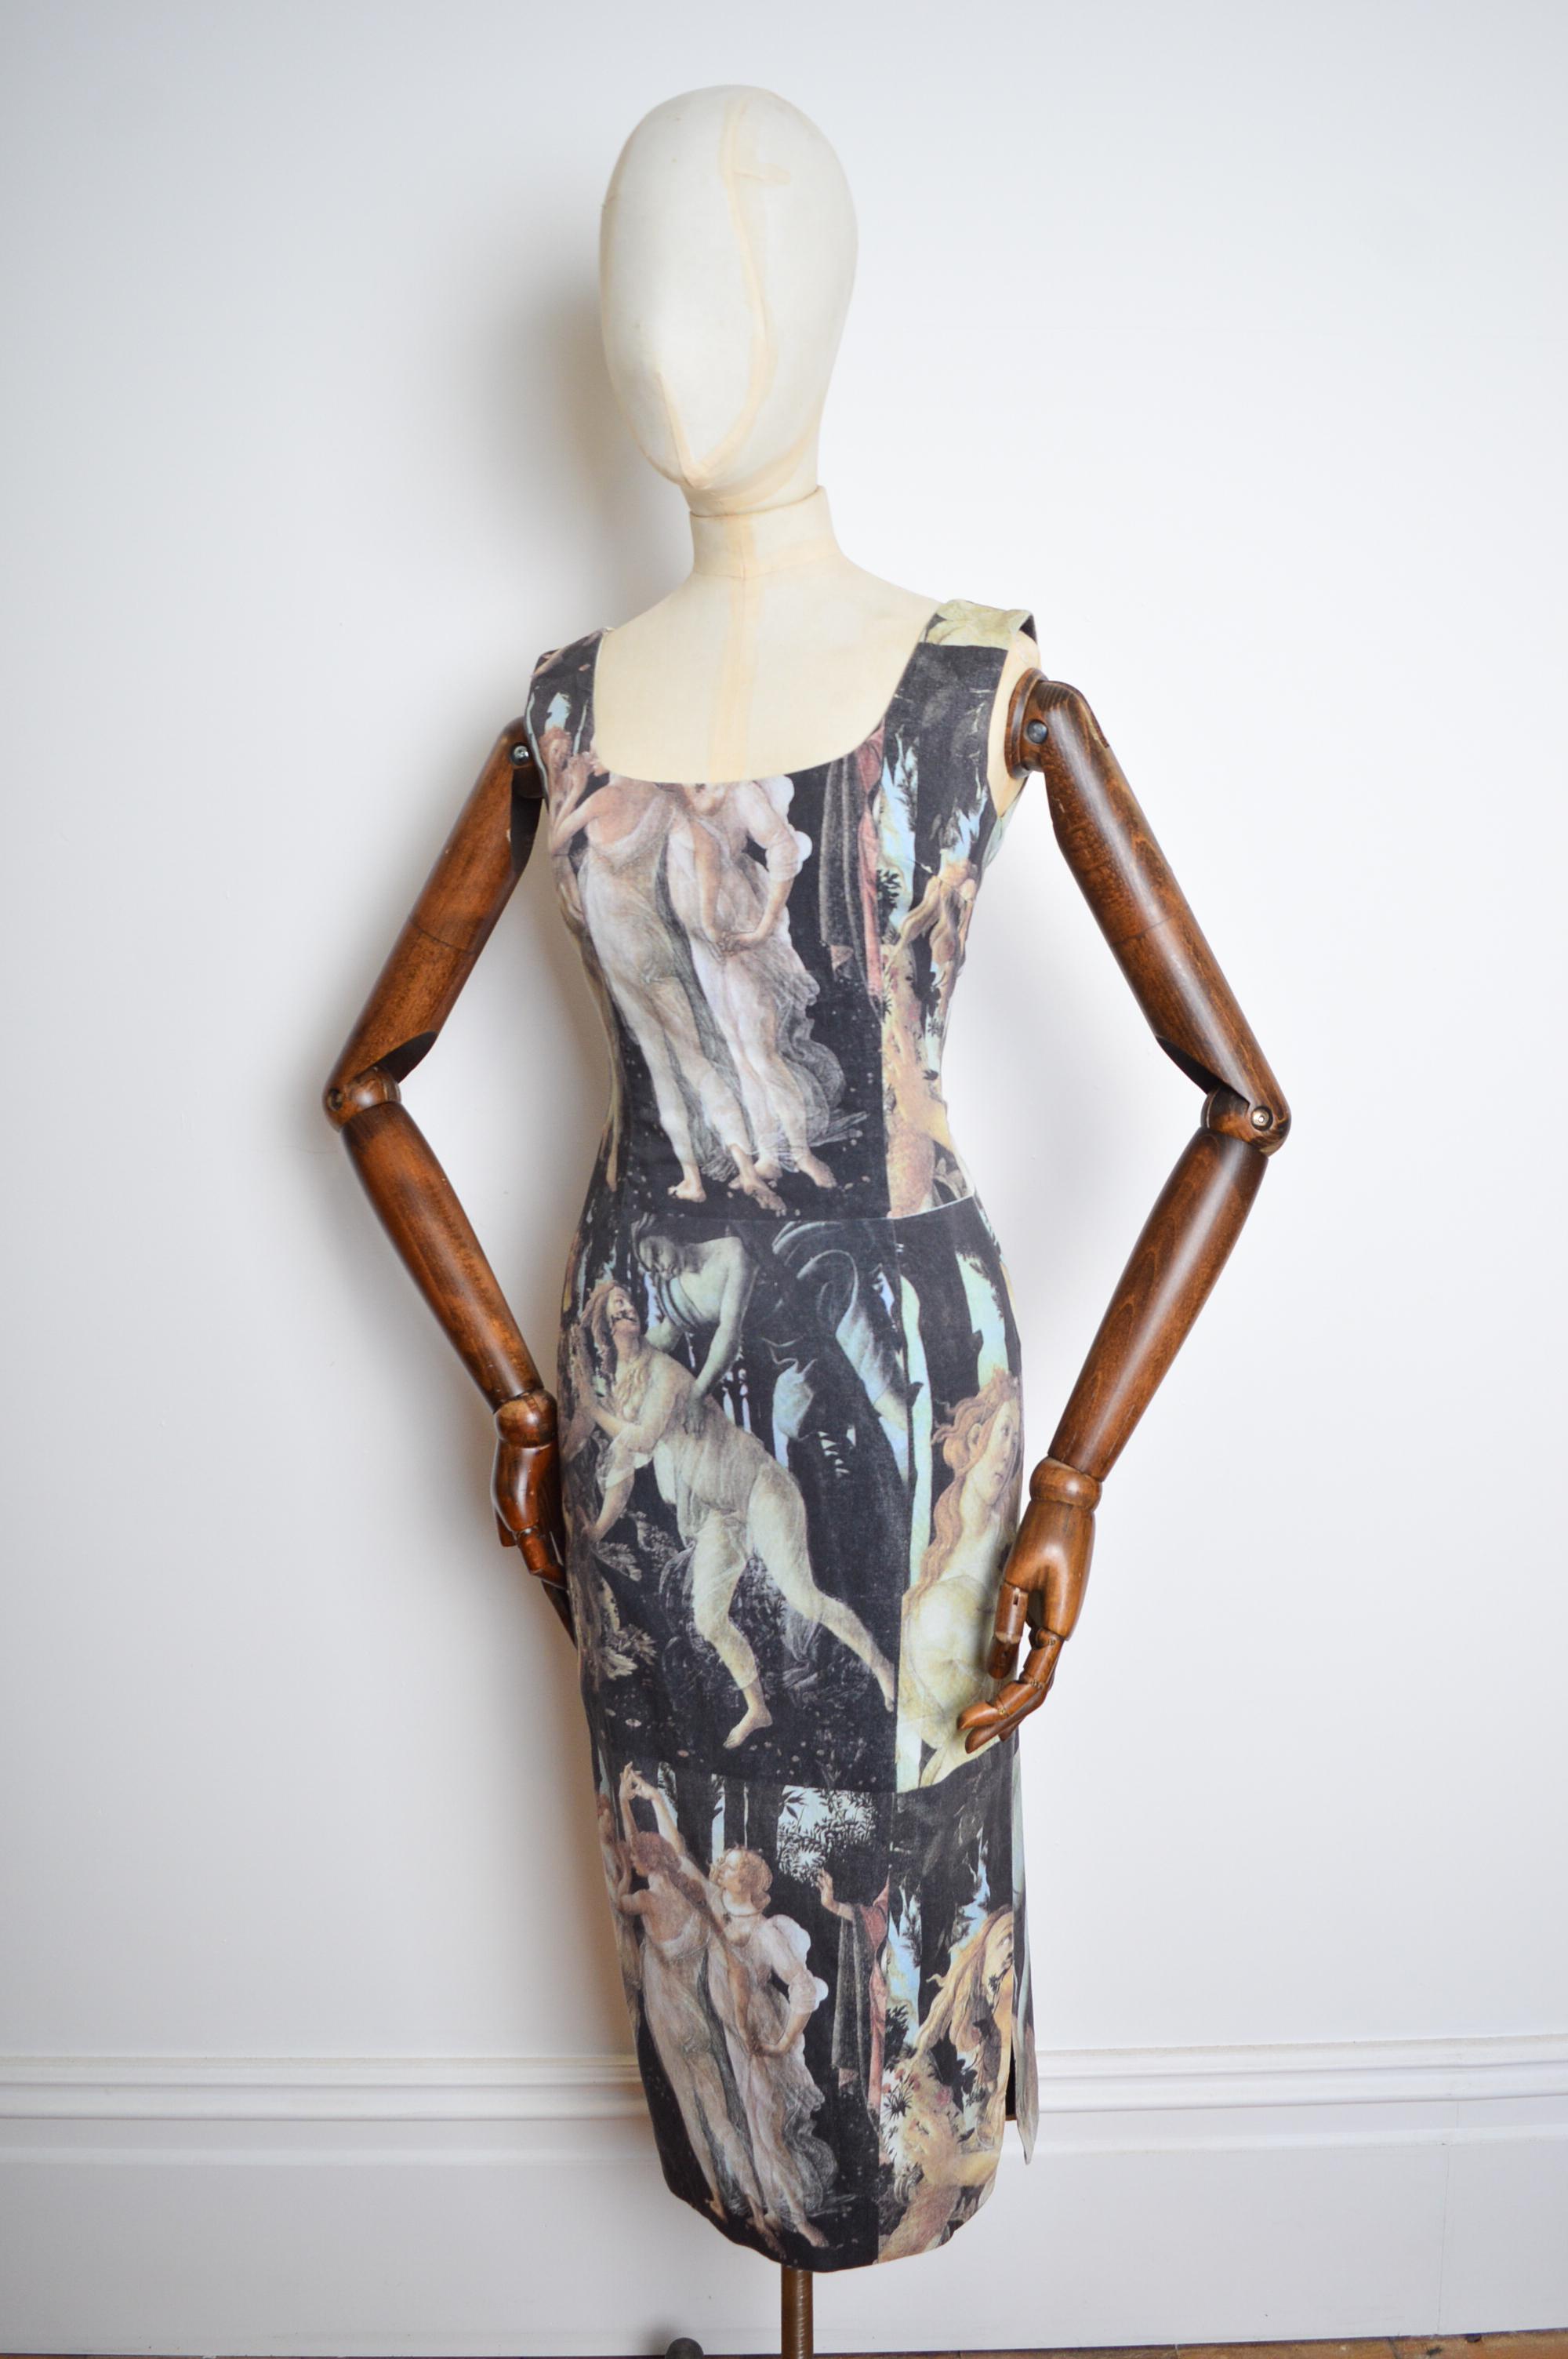 SS 1993 DOLCE & GABBANA Body con Botticelli Primavera Art Runway cocktail Dress For Sale 11